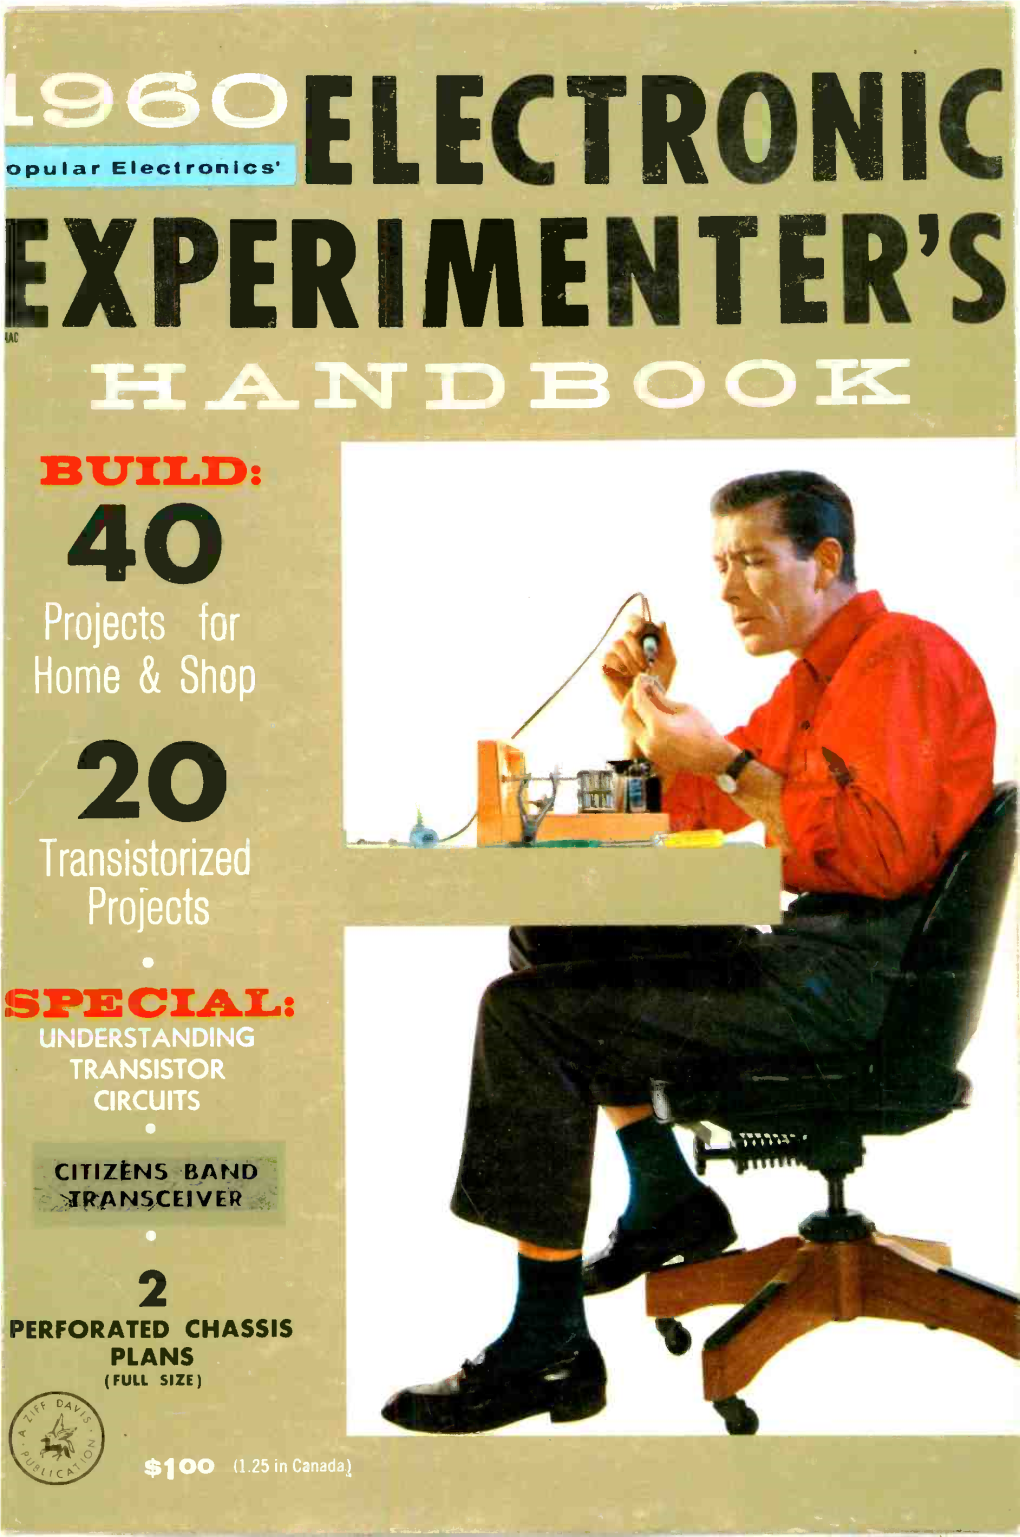 Experimenter's Build:40 20